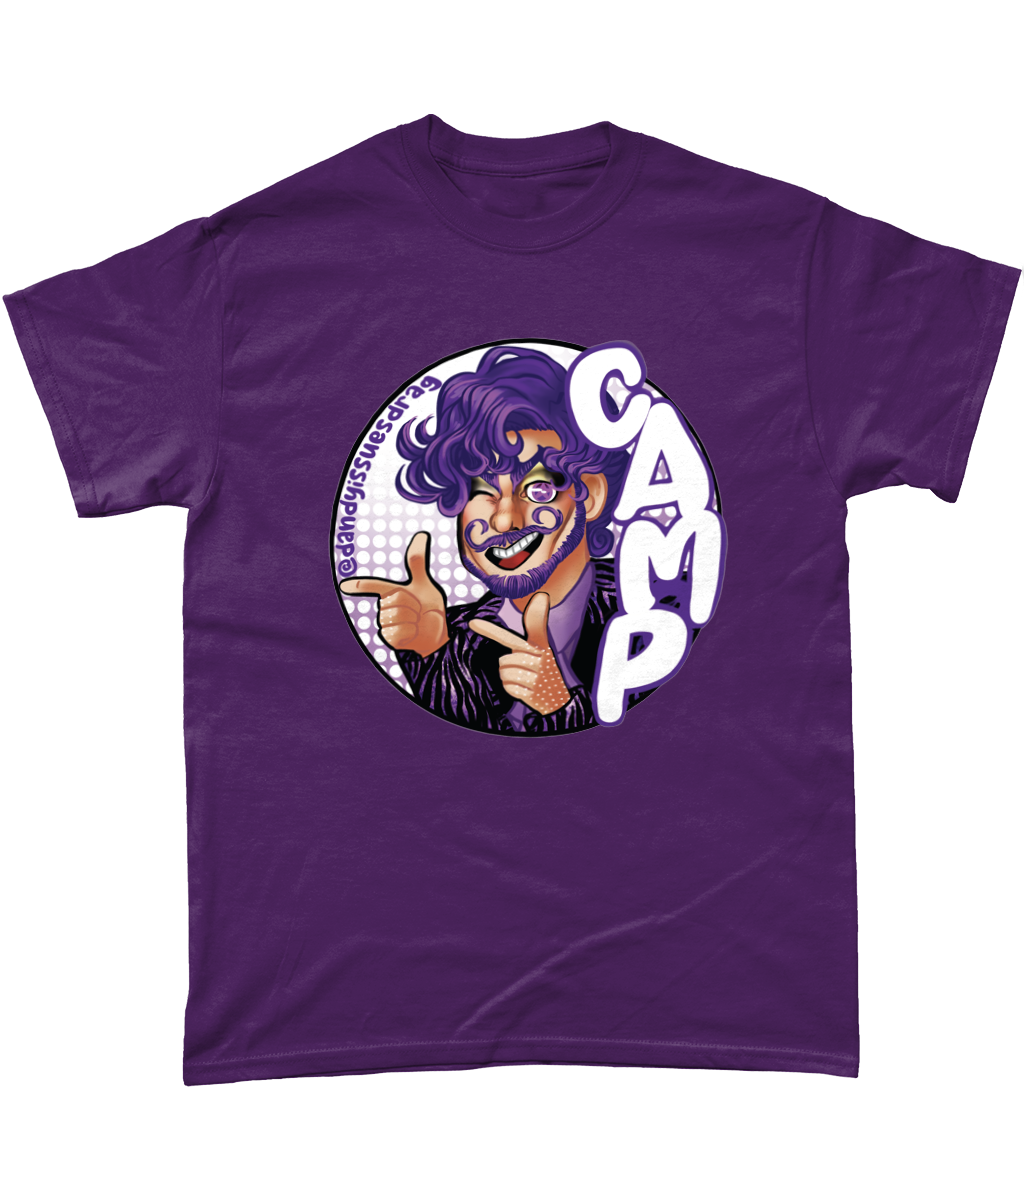 Dandy Issues Purple Camp T-shirt